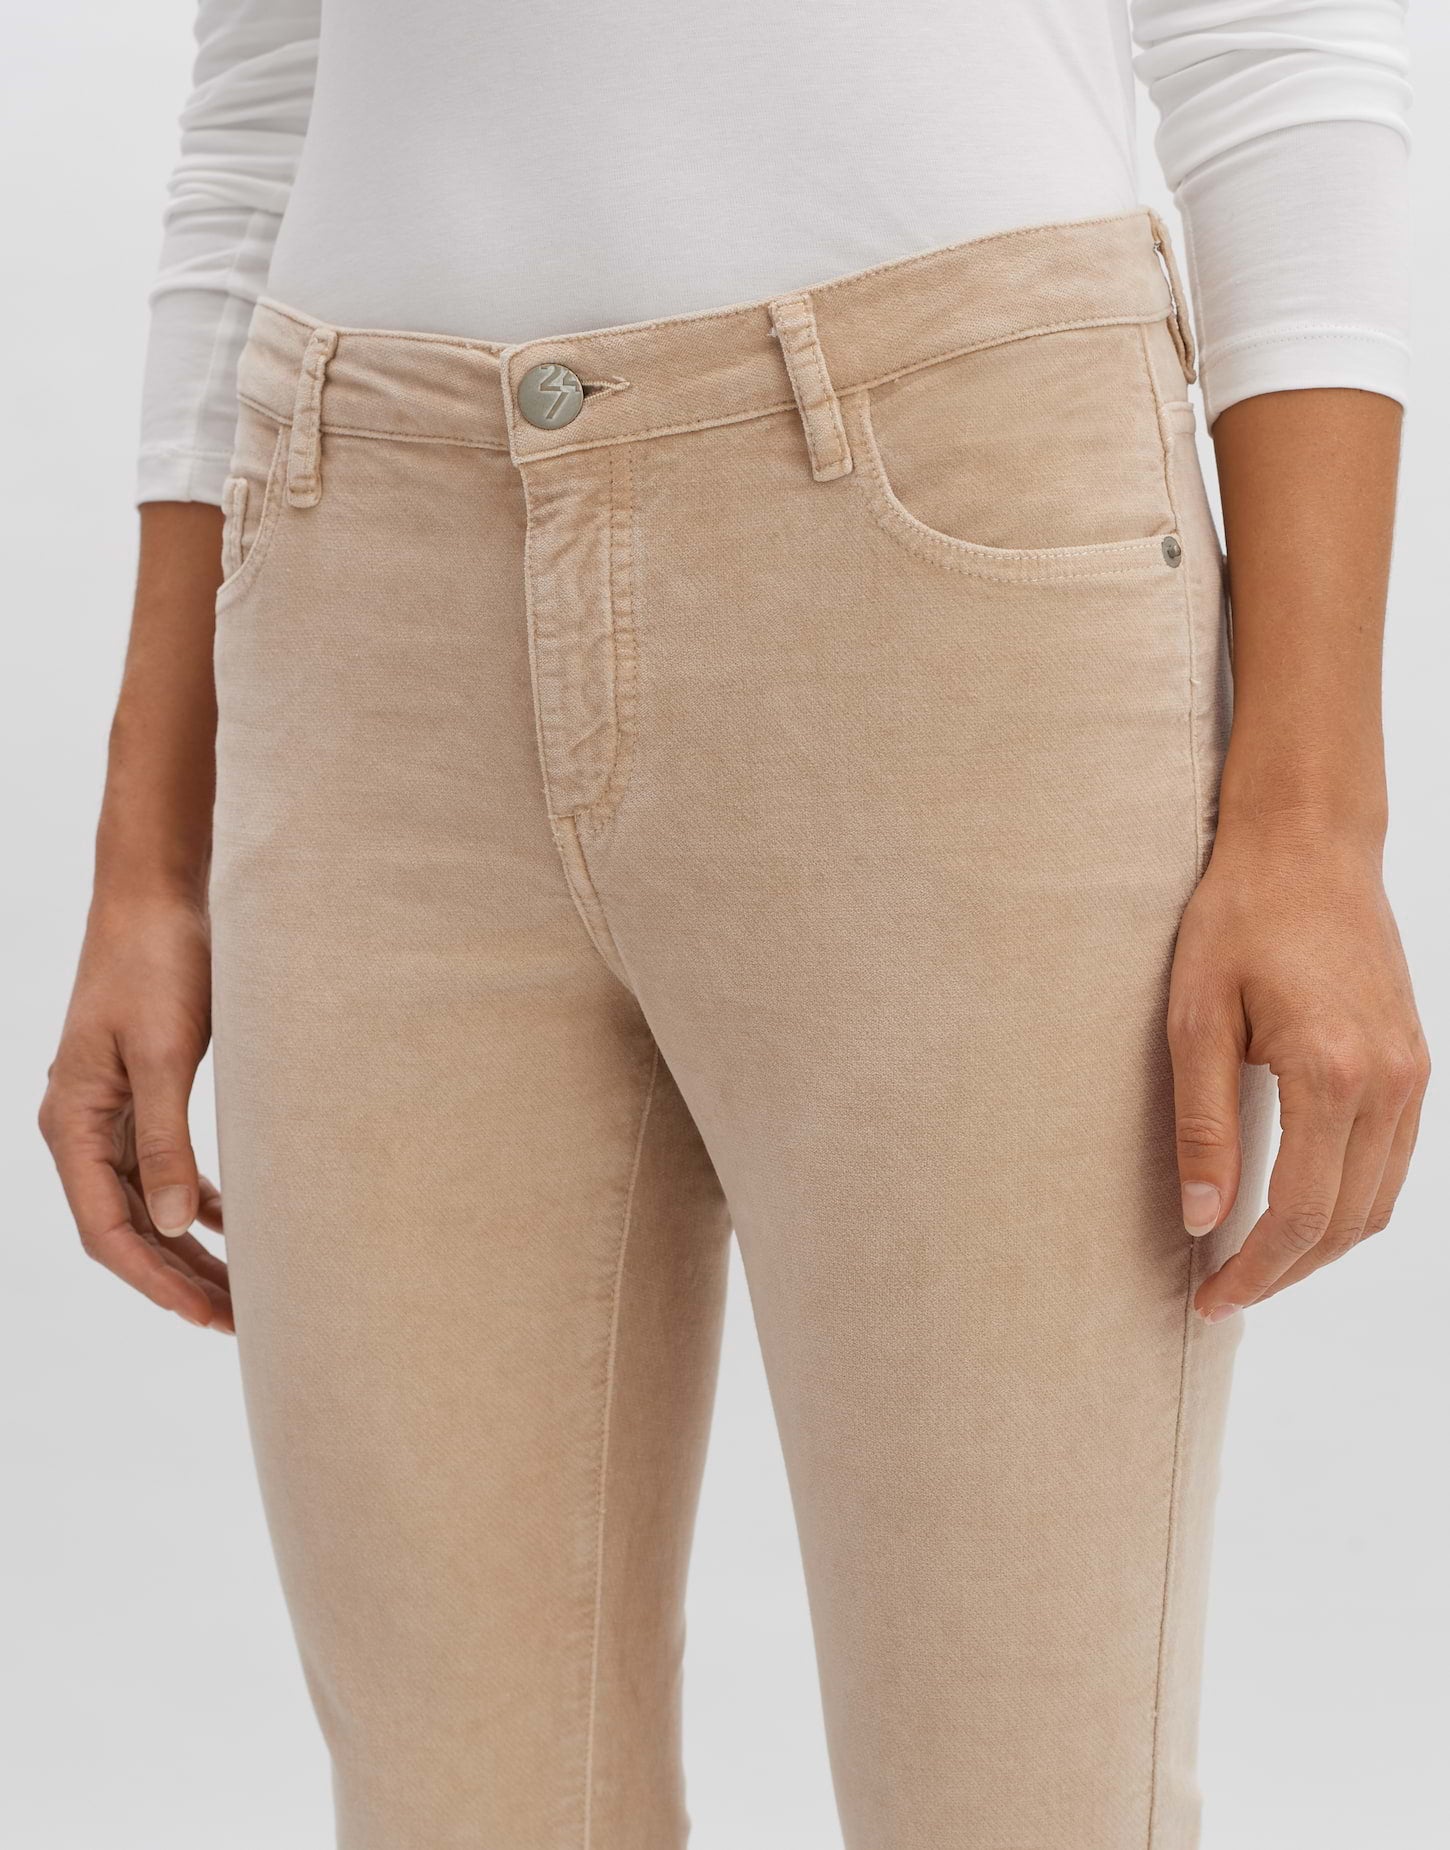 Opus - Slim Fit Jeans - Evita glazed